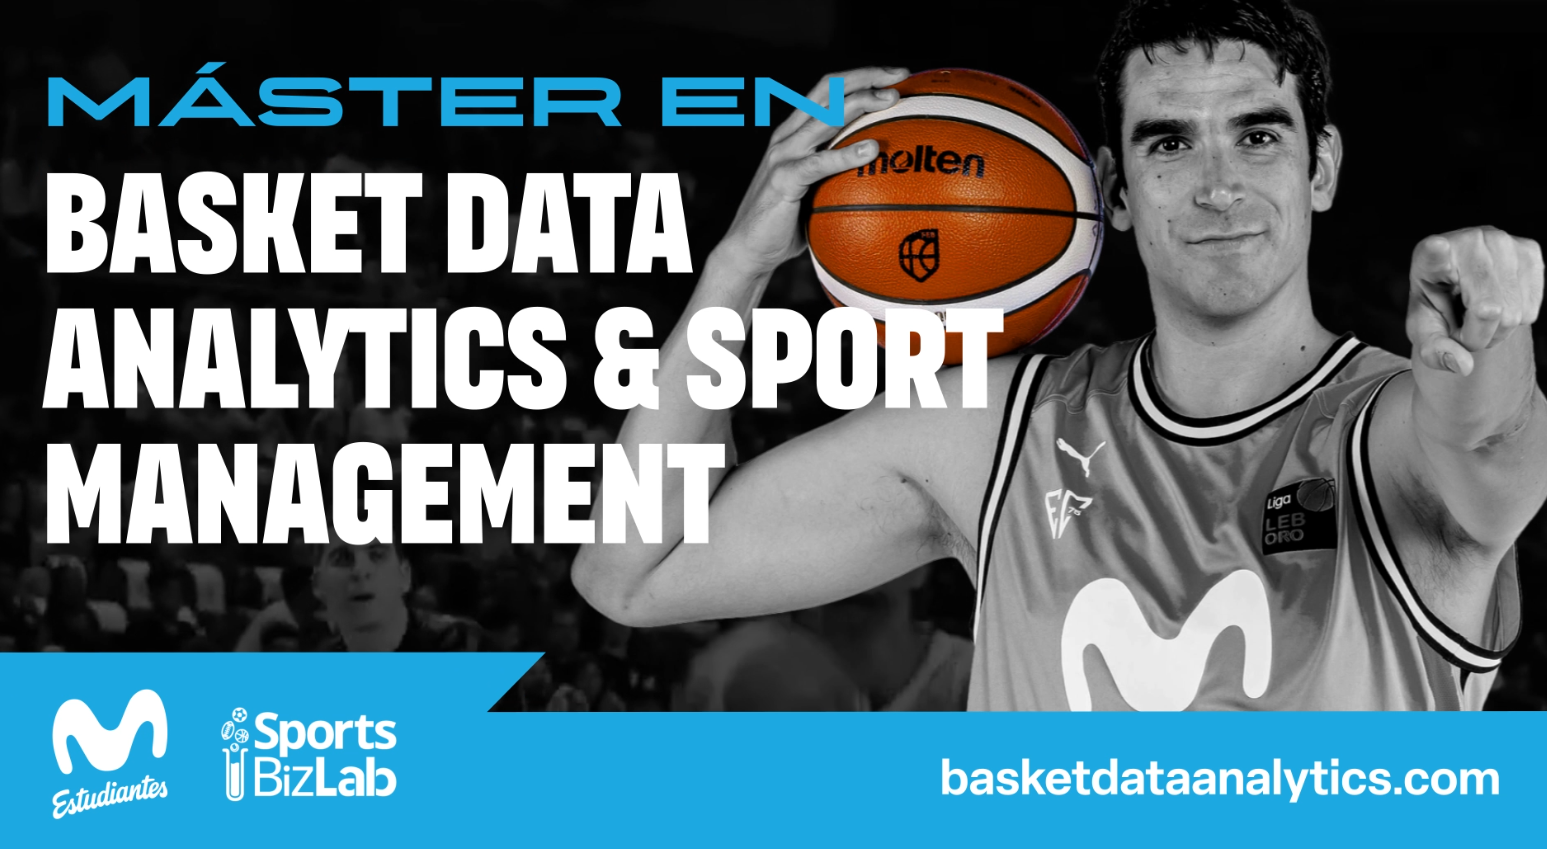 Últimos días para matricularse en el Máster en Basket Data Analytics & Sport Management